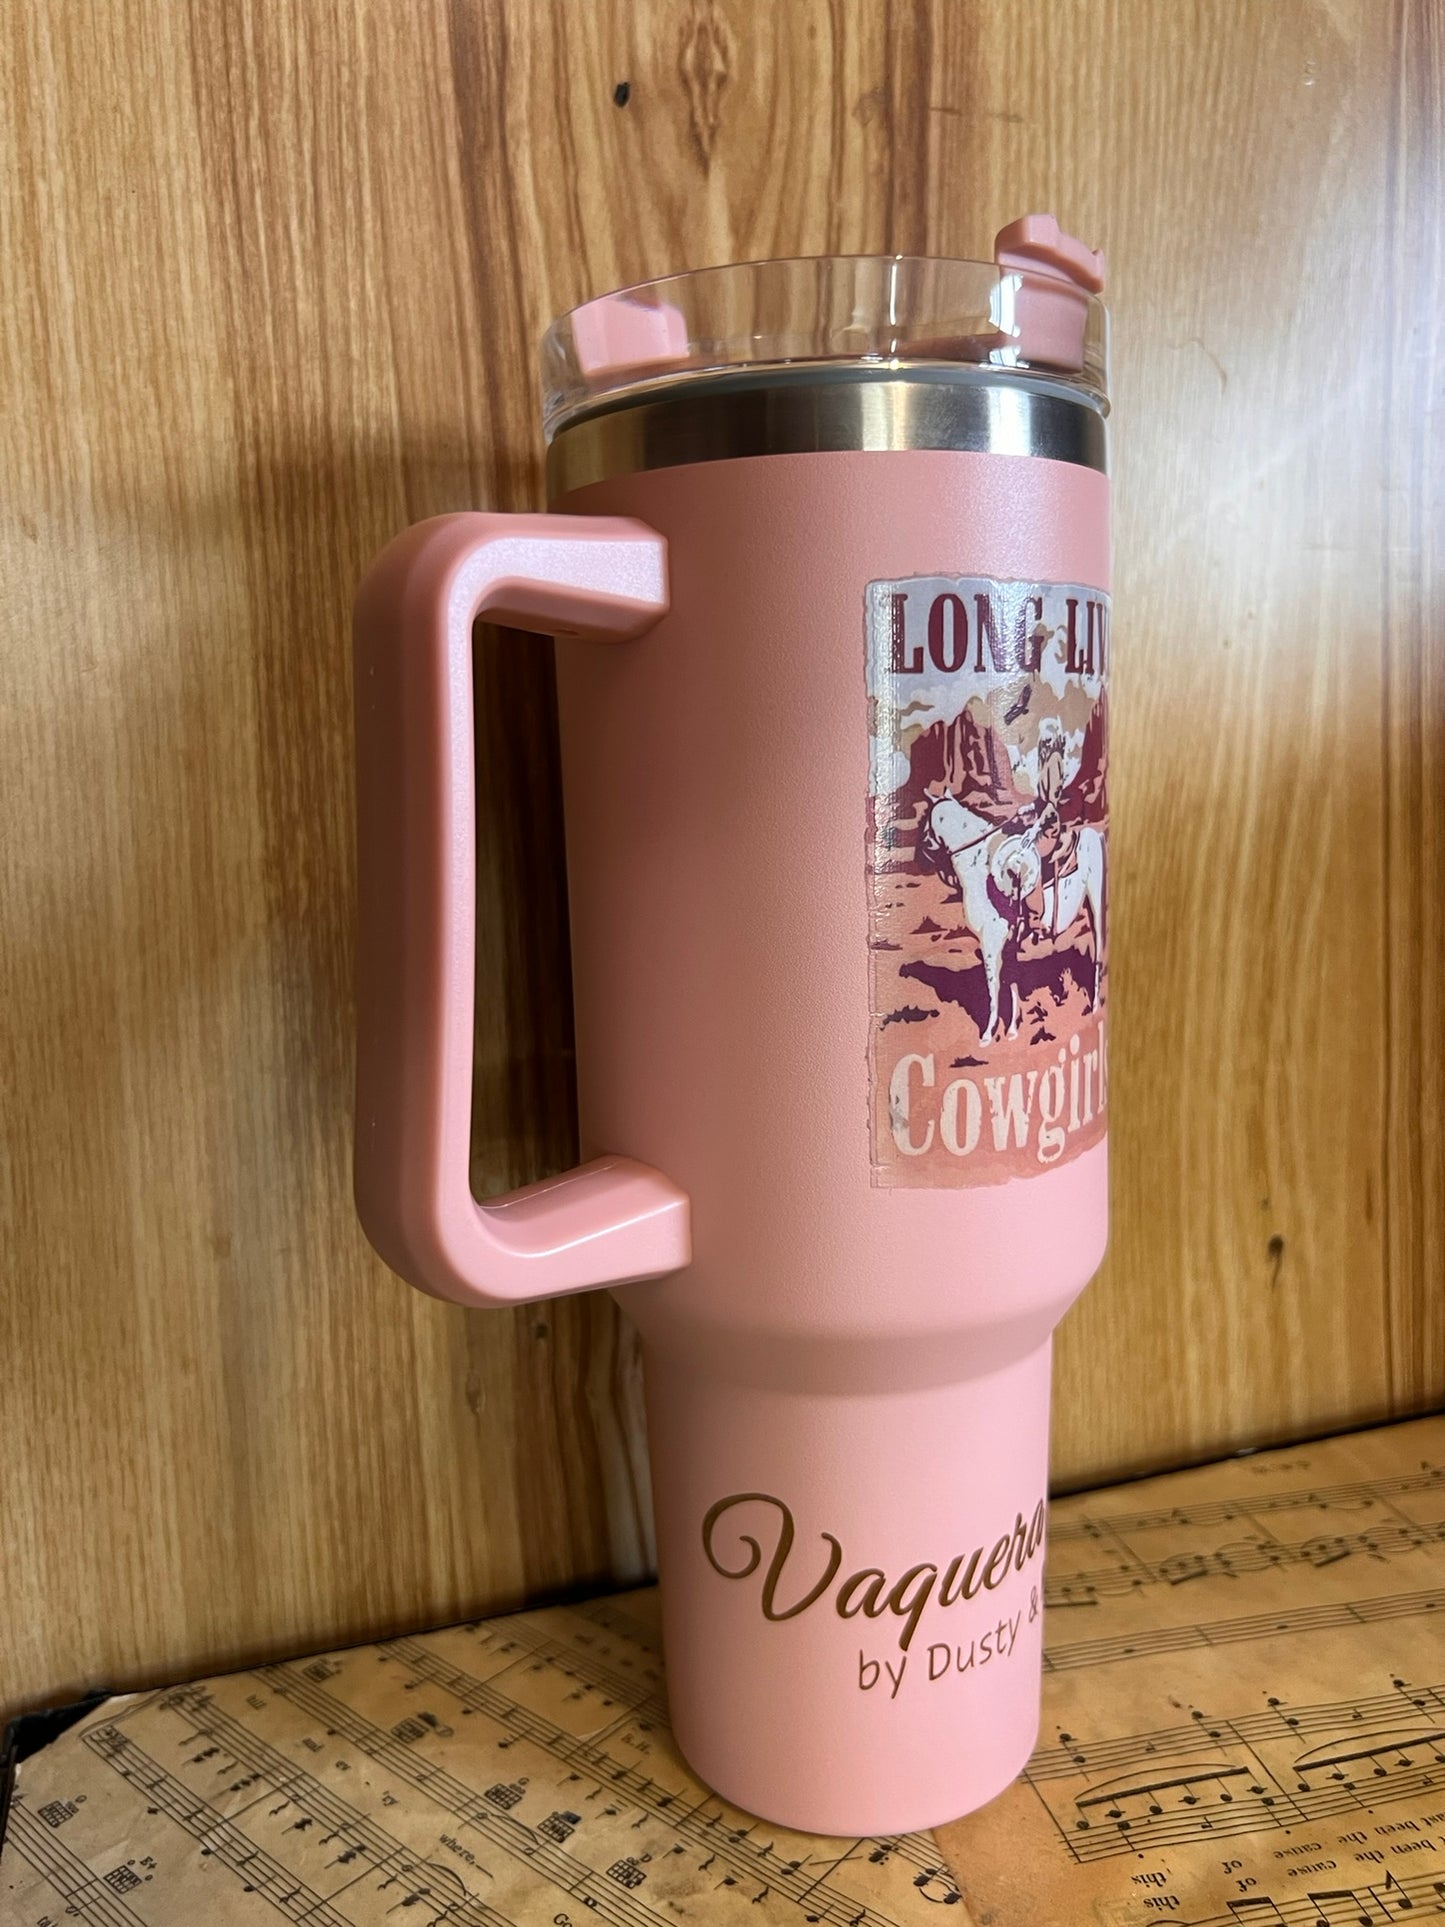 Long Live Cowgirls Travel Mug